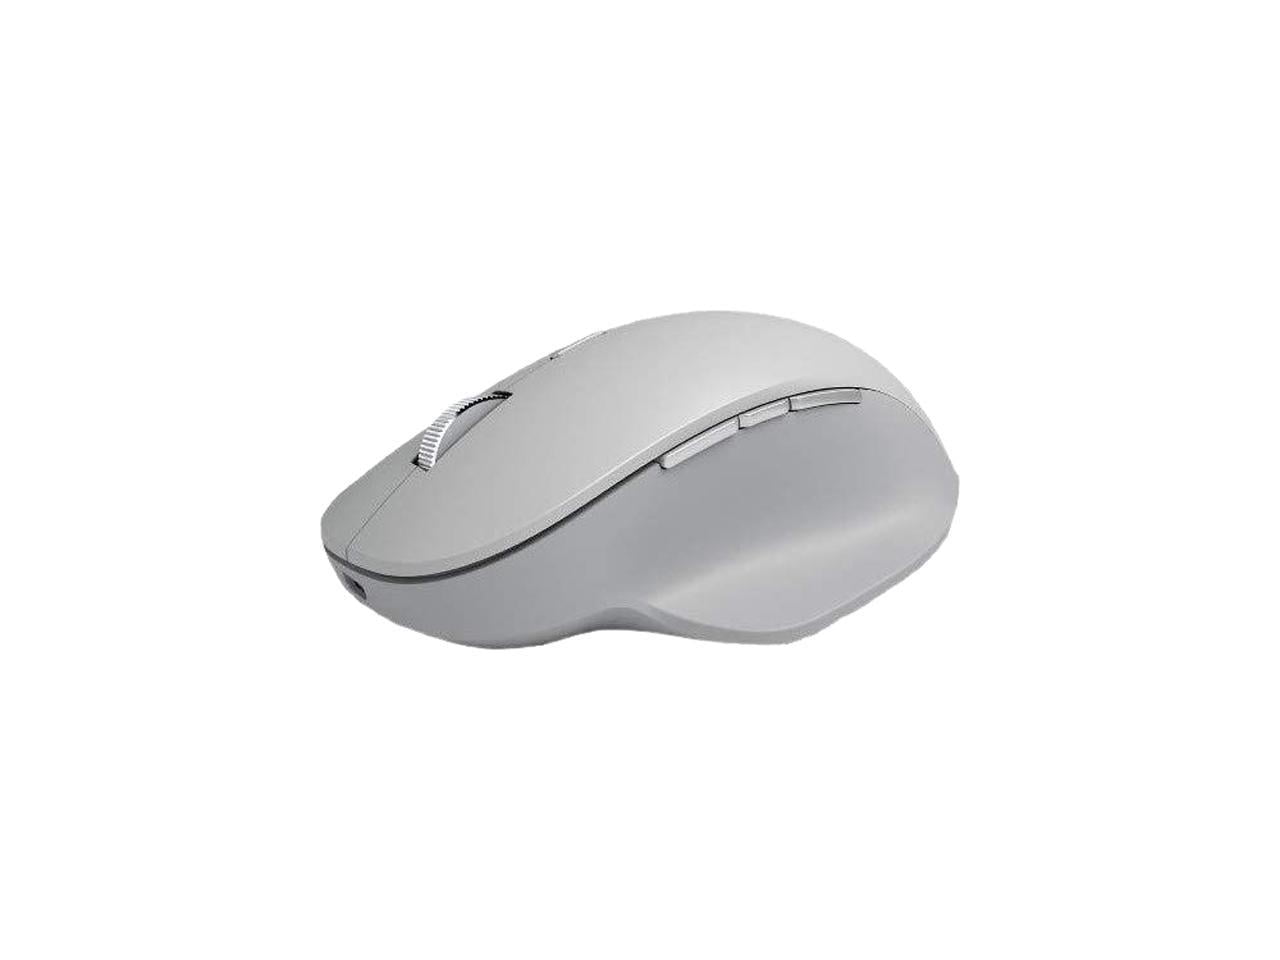 Microsoft Surface Precision Mouse, Bluetooth 4.0 - Gray | Kabelmäuse